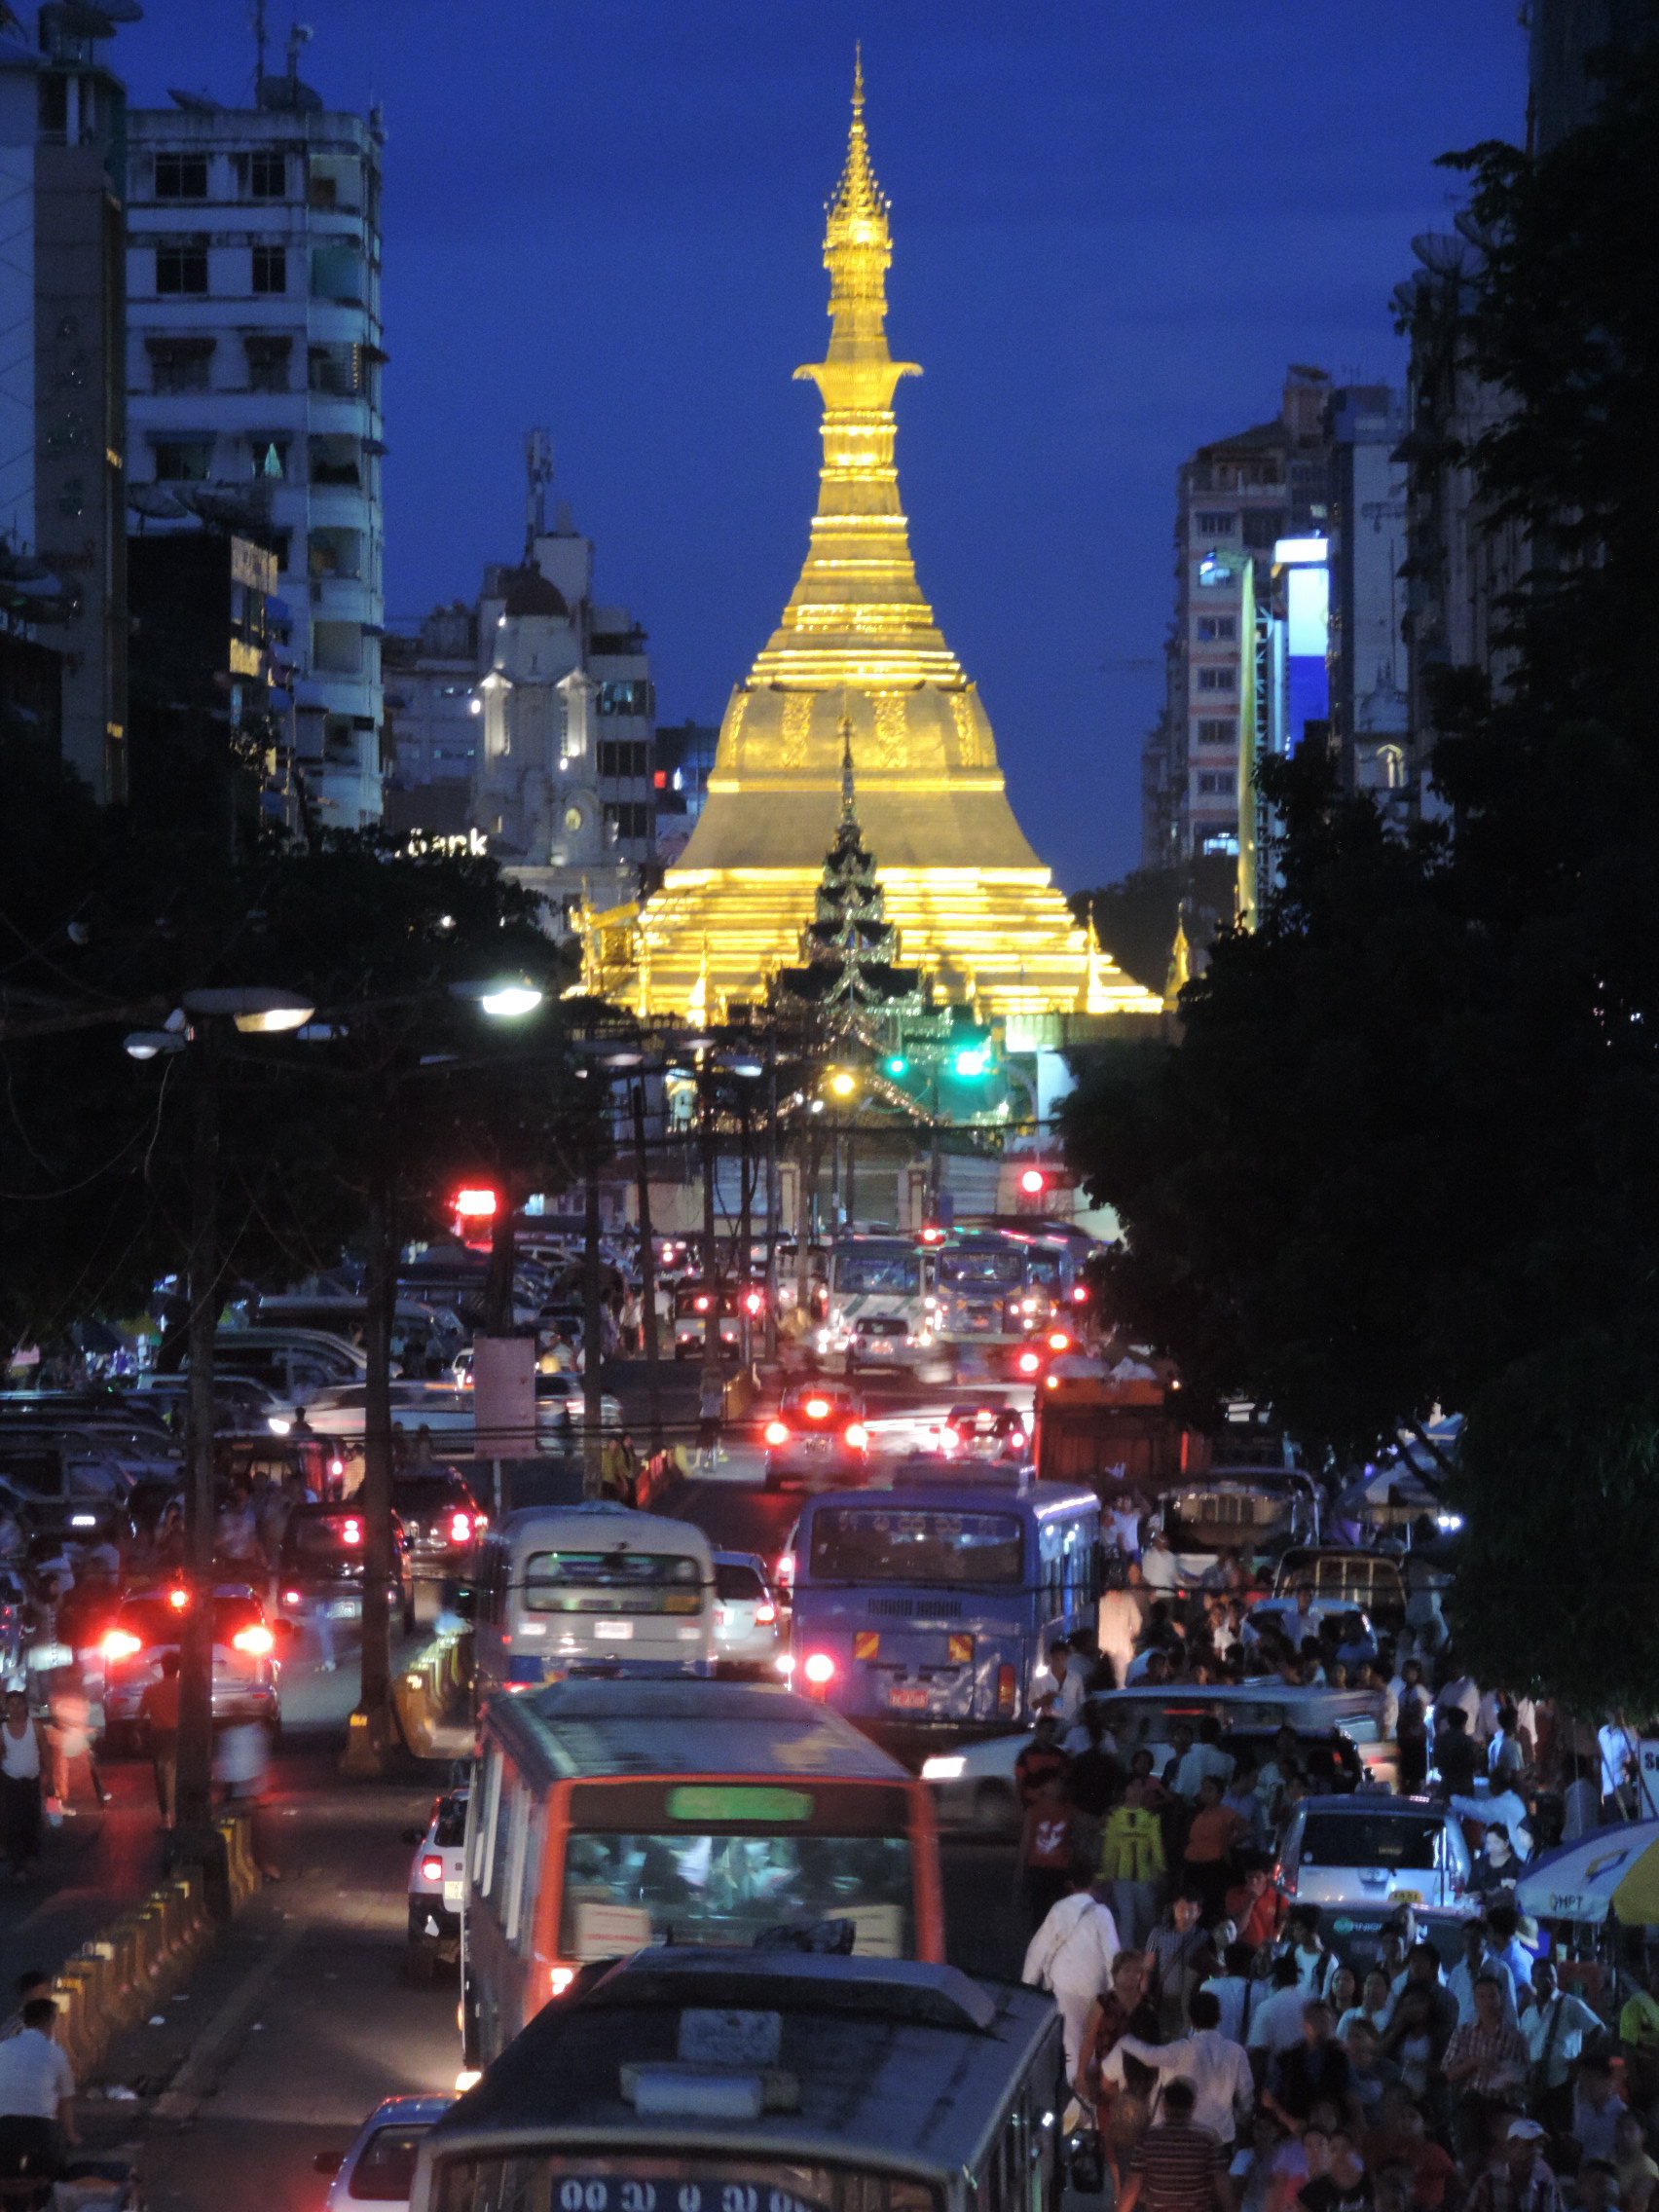 The Sule Pagoda